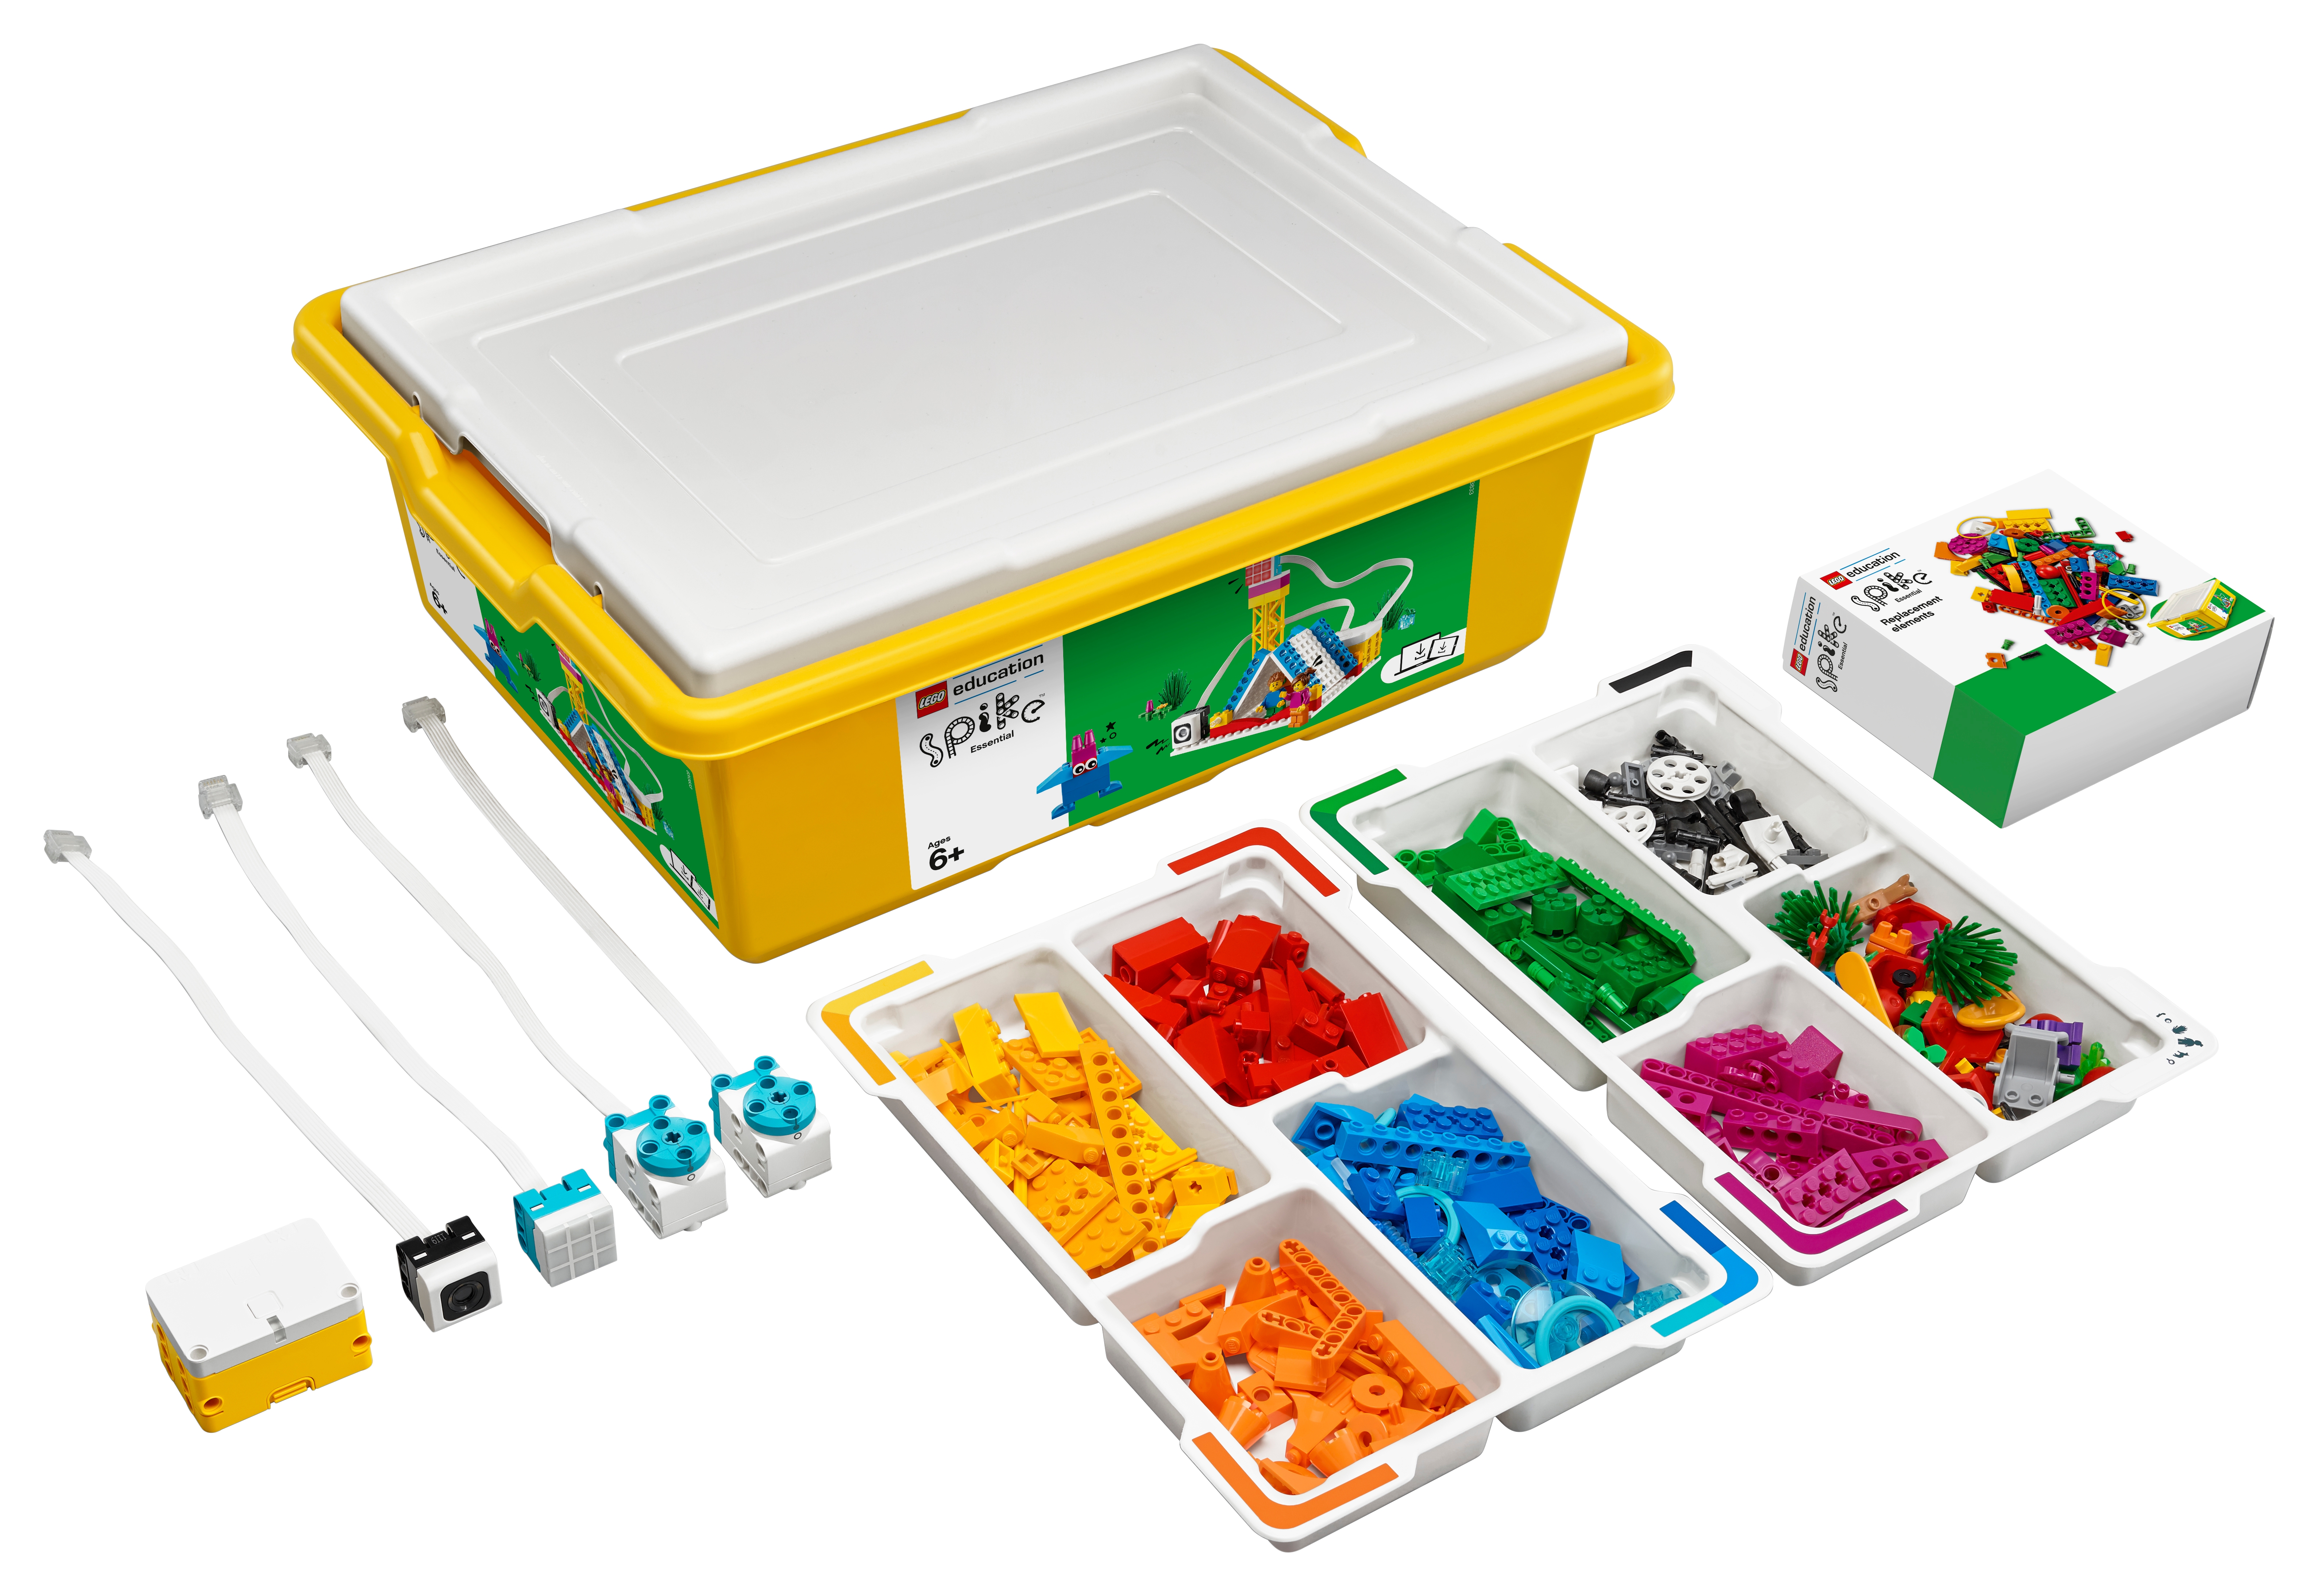 LEGO® Education Toys | Official LEGO® Shop US